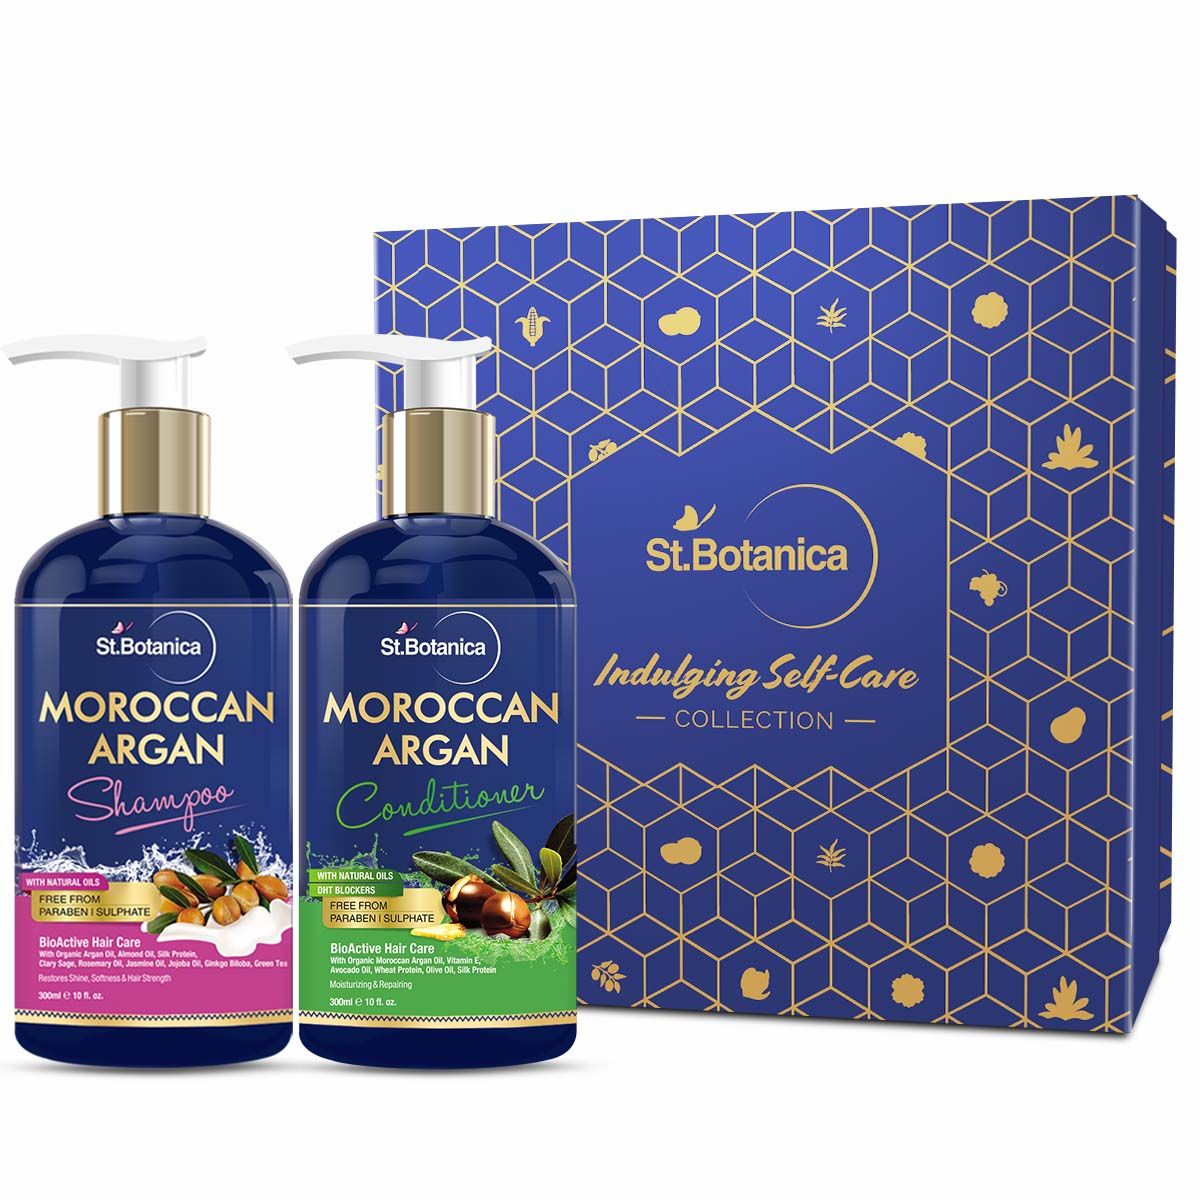 St.Botanica Moroccan Argan Hair Shampoo + Argan Hair Conditioner